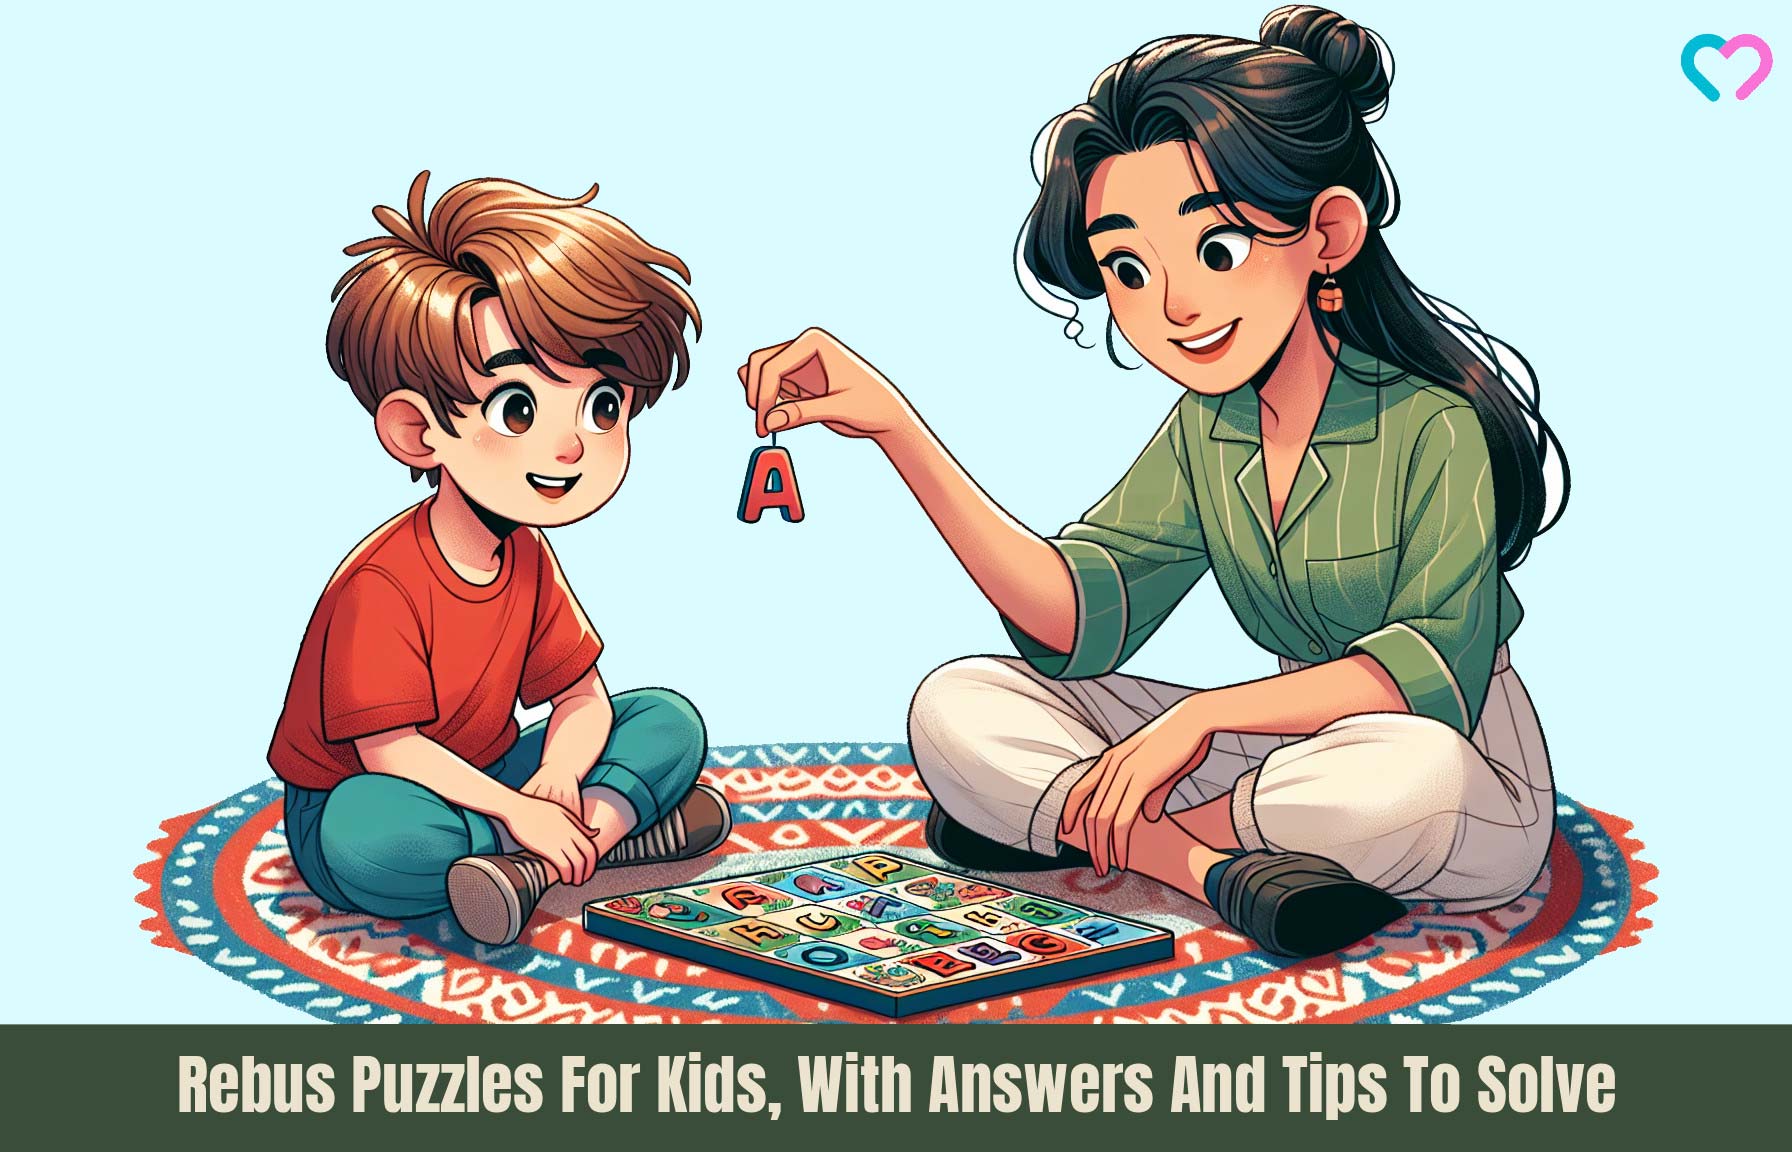 Rebus puzzles for kids_illustration